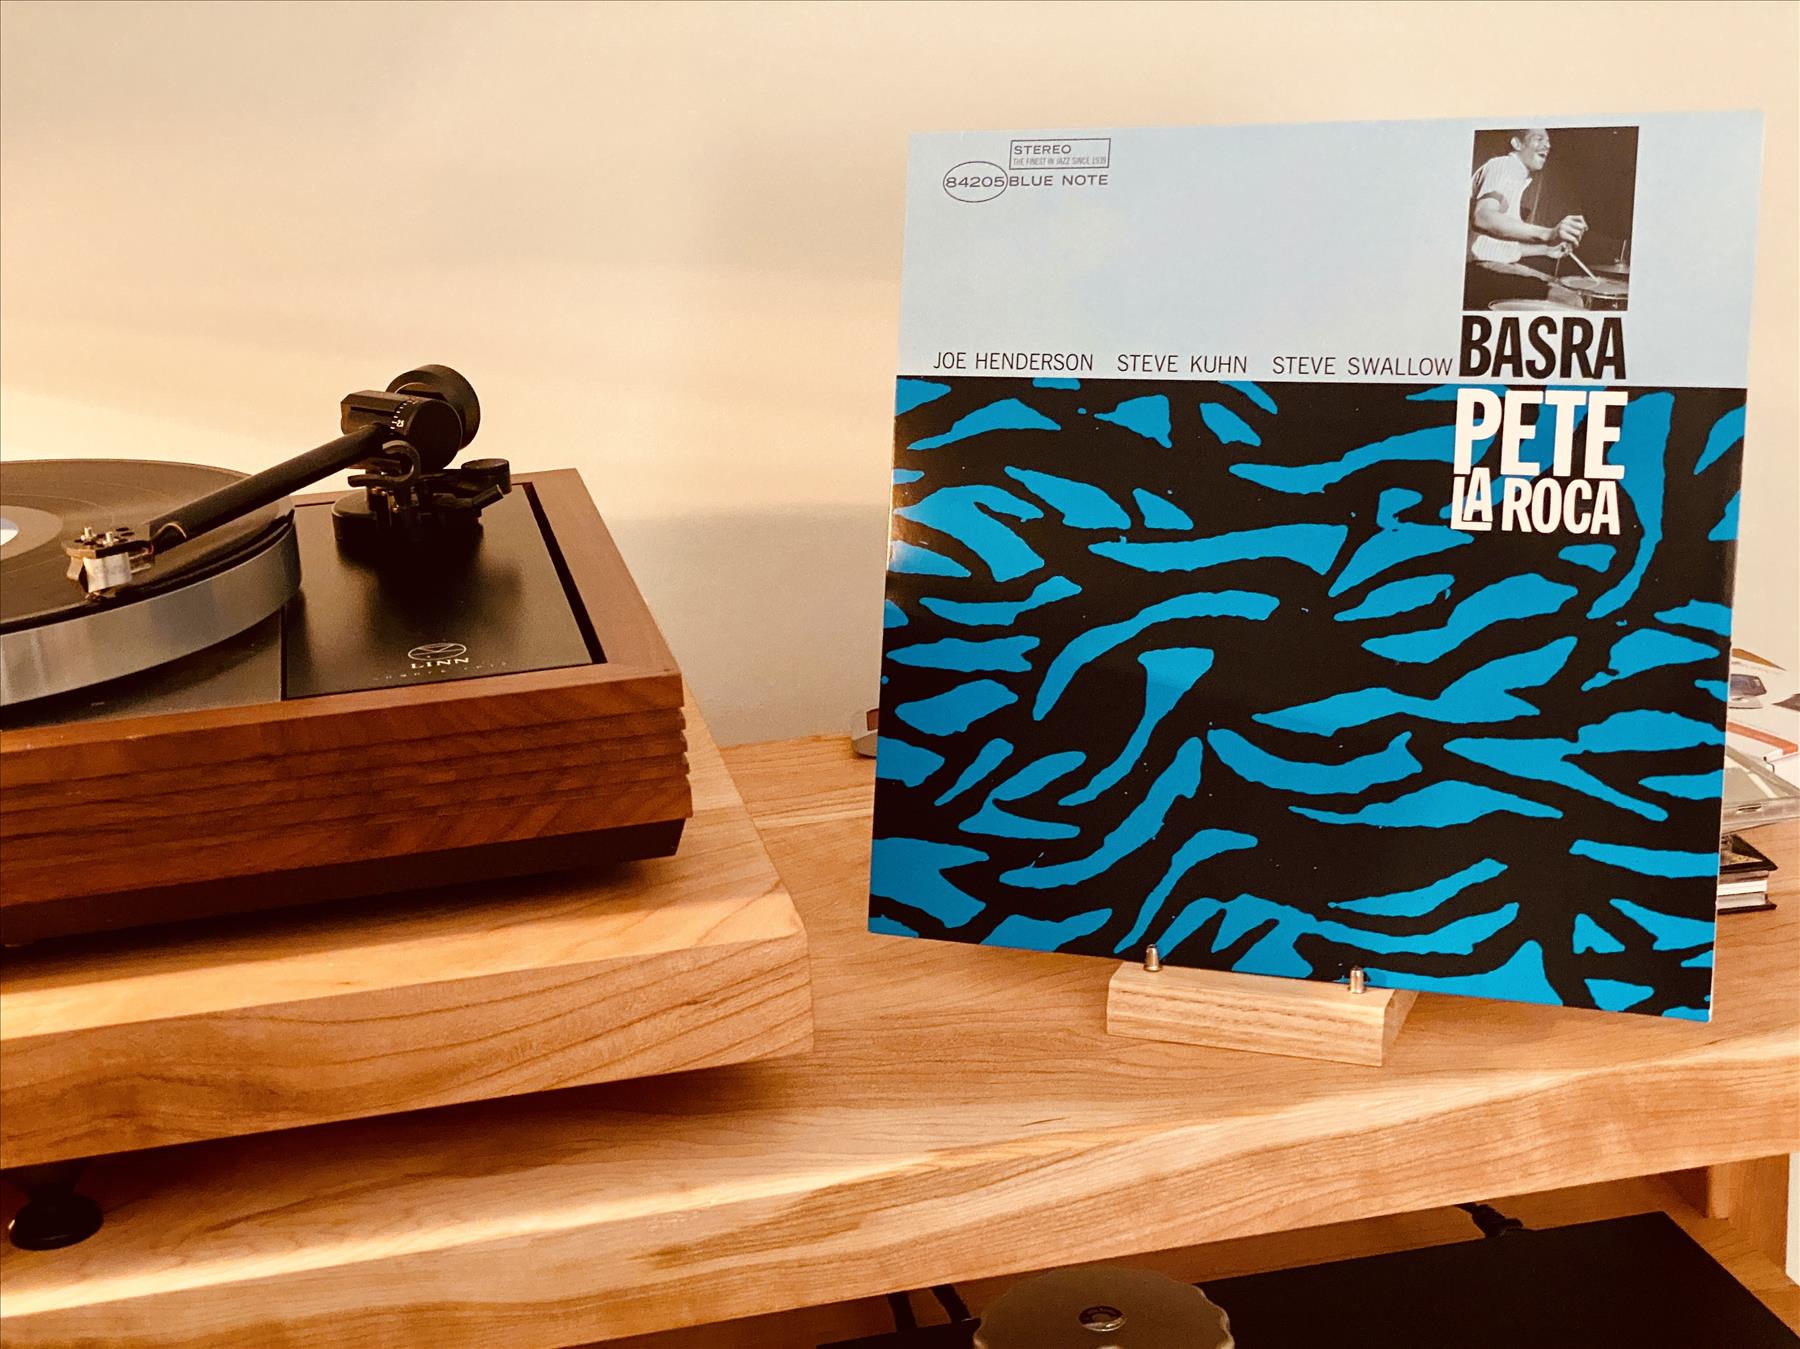 Pete La Roca: Basra  is an essential Blue Note Jazz recording